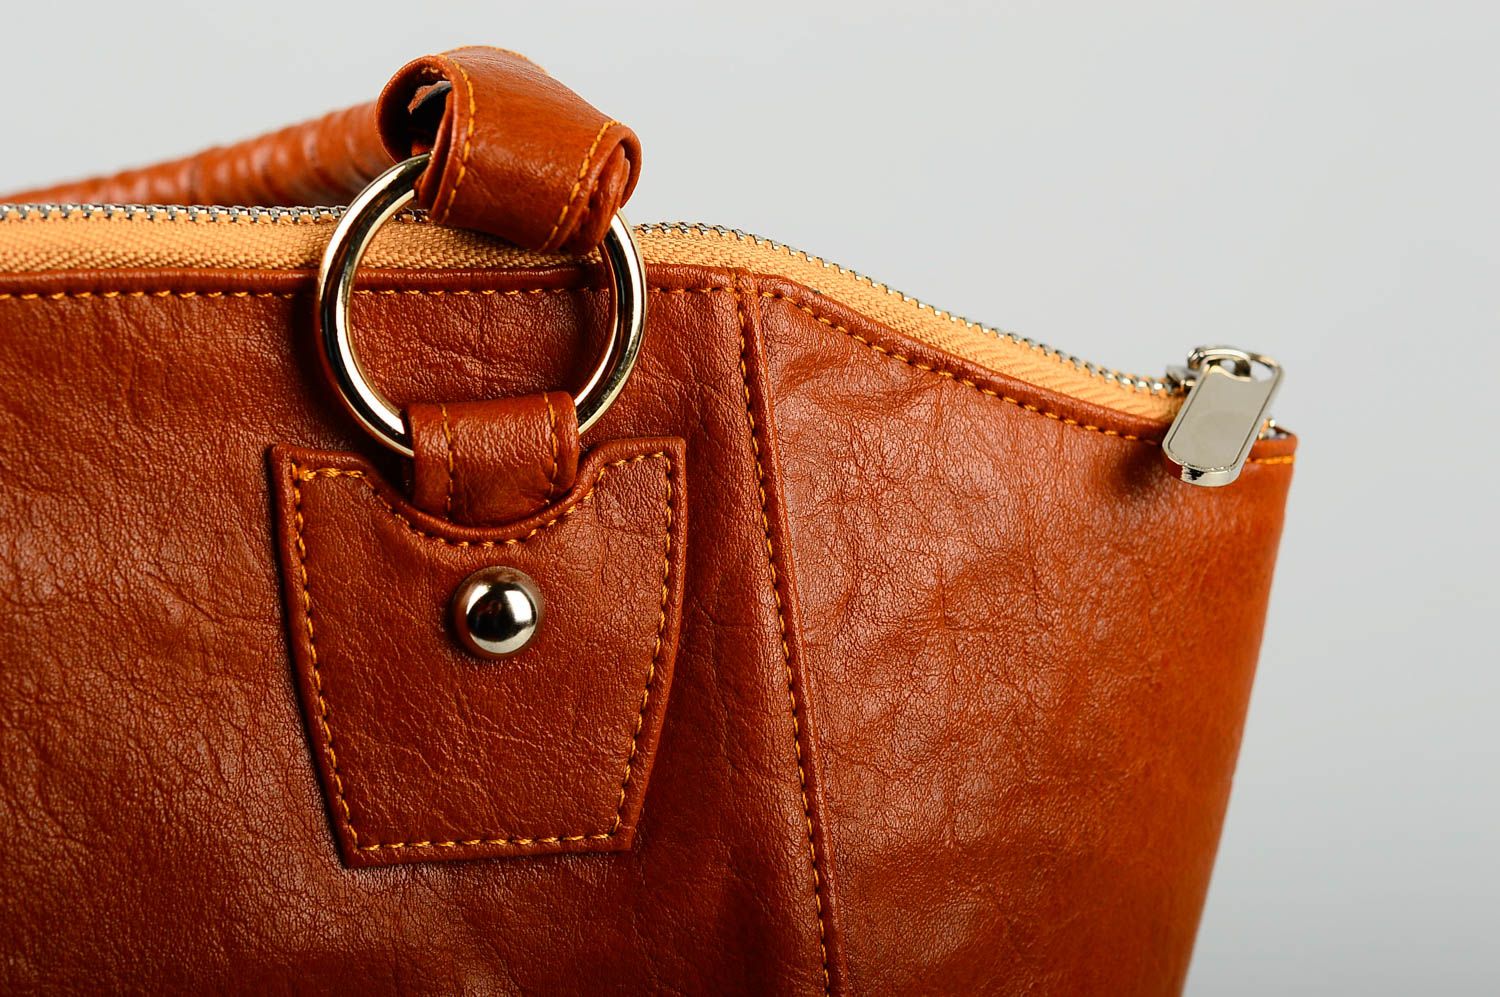 Stylish handmade leather bag leather goods handbag design fashion trends photo 4